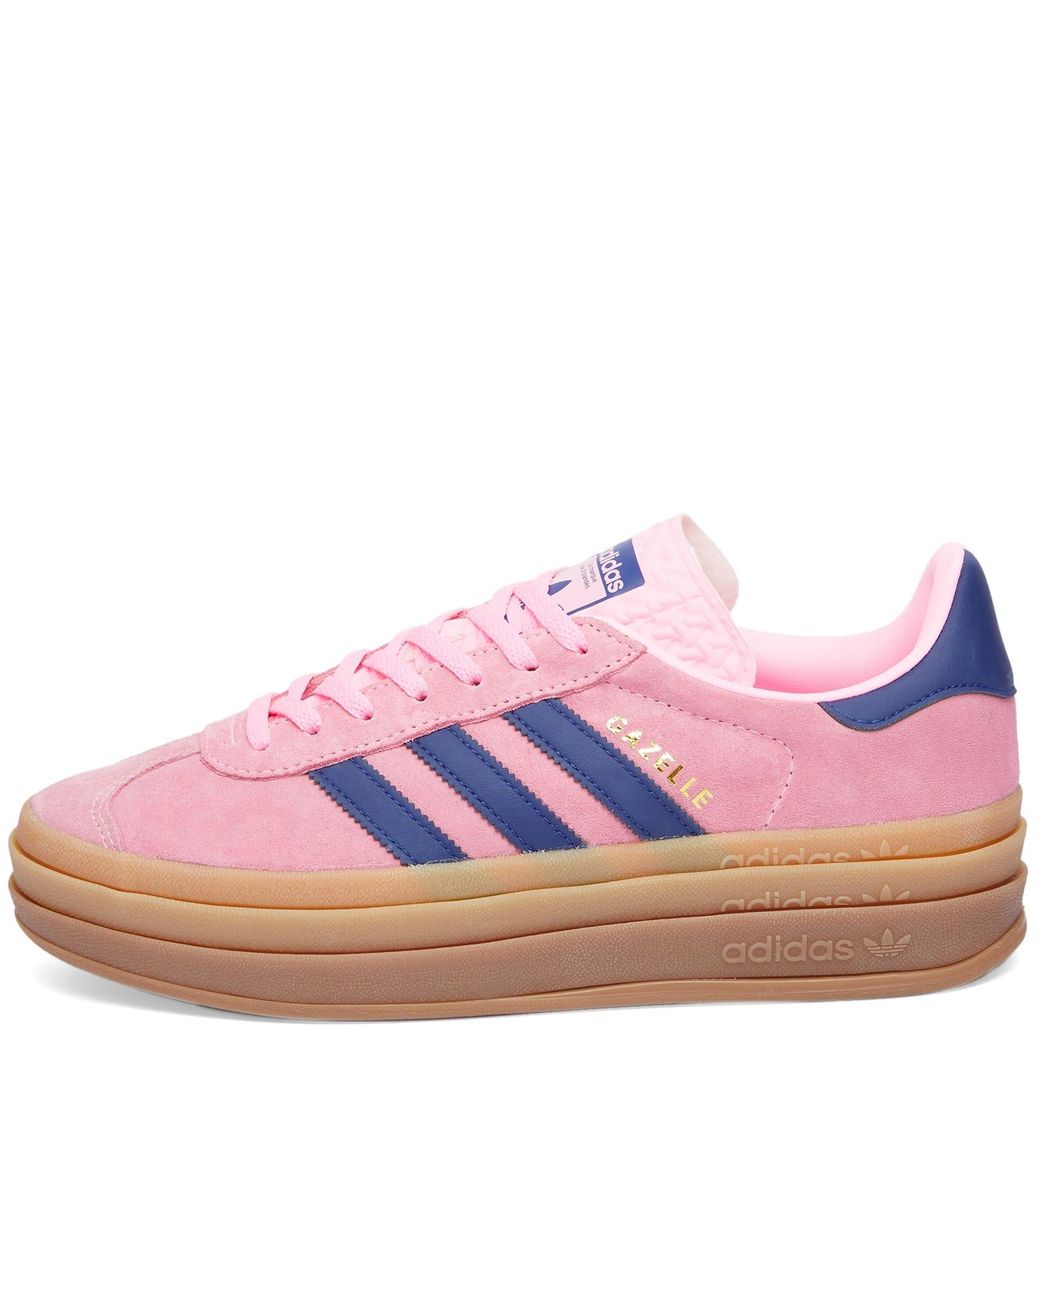 adidas gazelles pink and blue